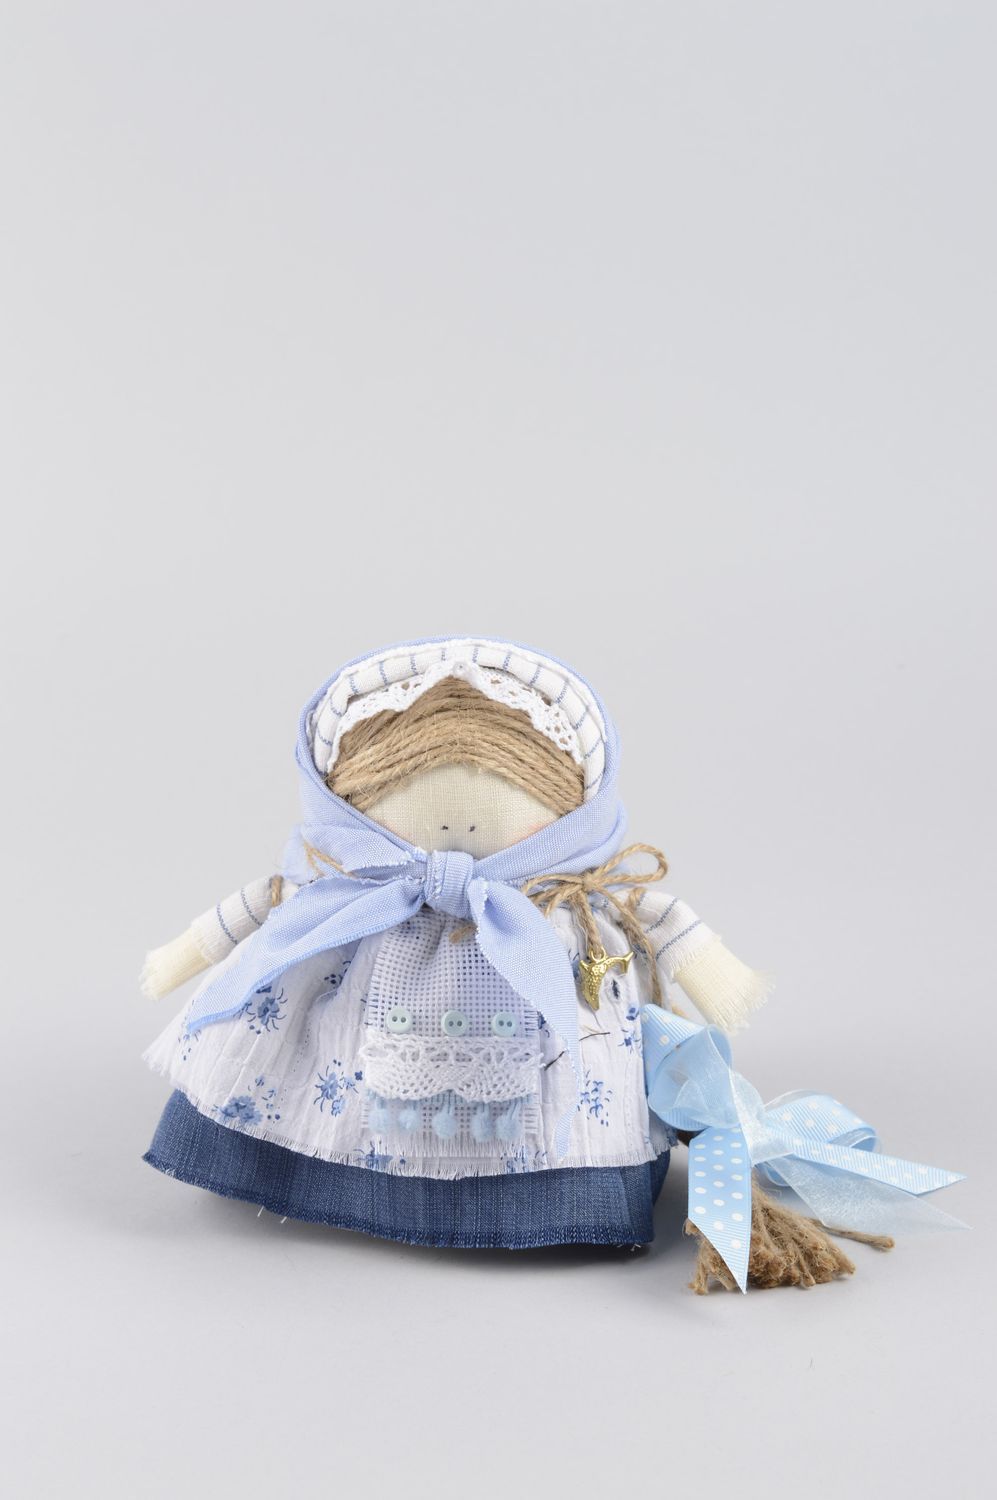 Handmade doll decorative use only nursery decor gift ideas soft doll for girls photo 1